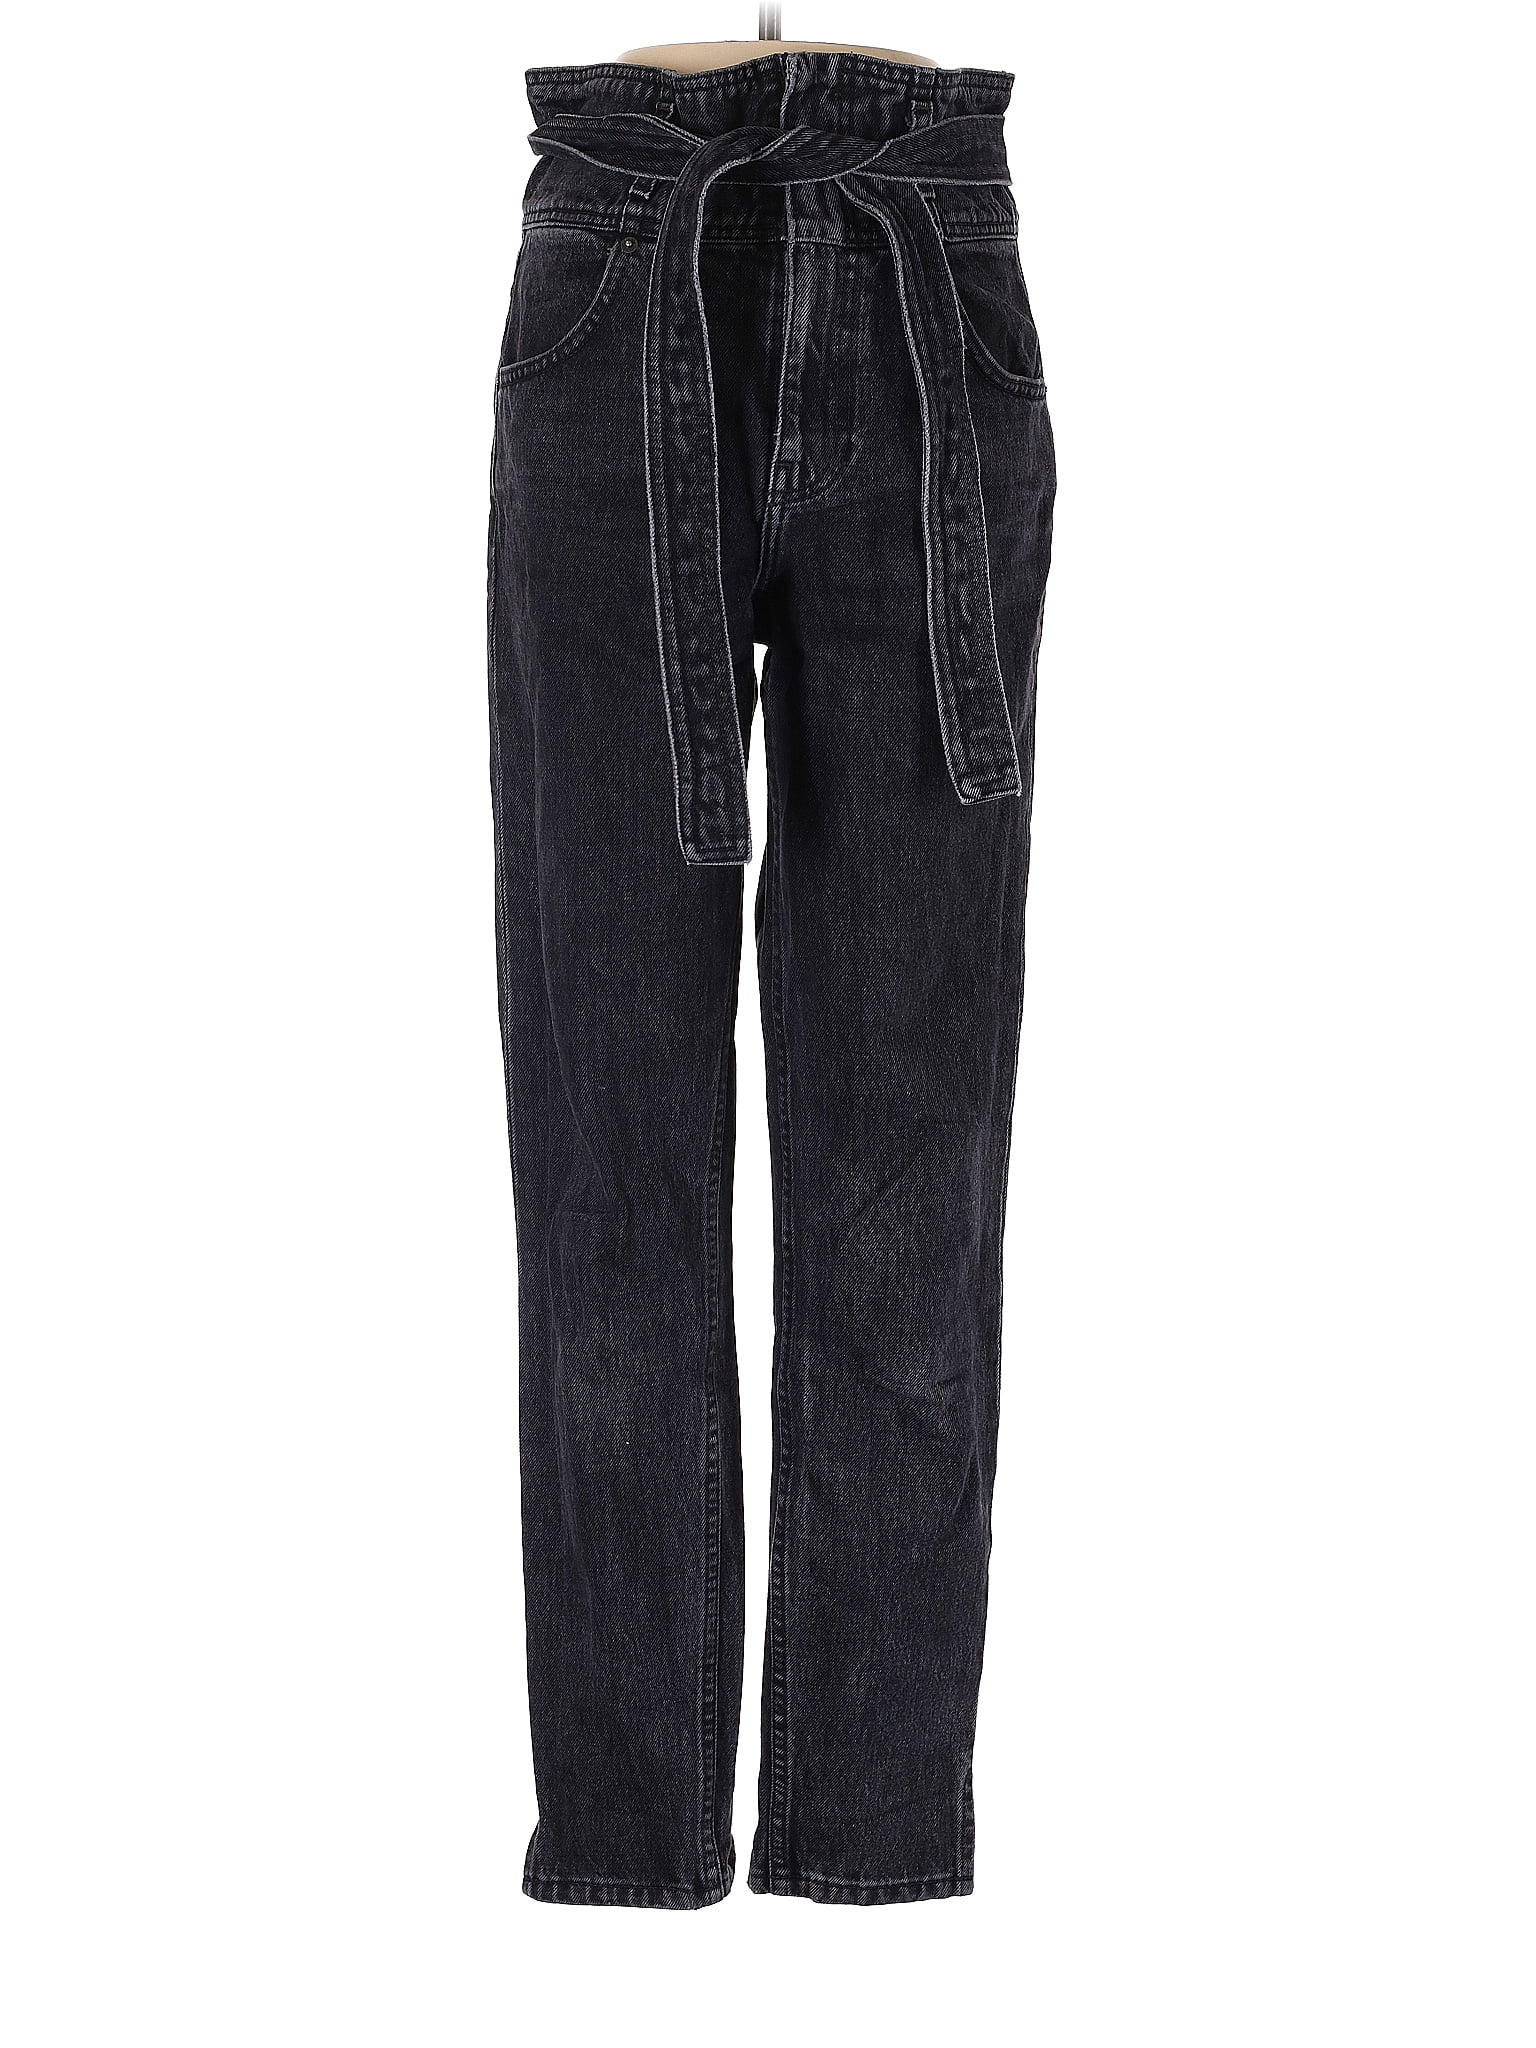 Reformation Solid Black Blue Jeans 25 Waist - 66% off